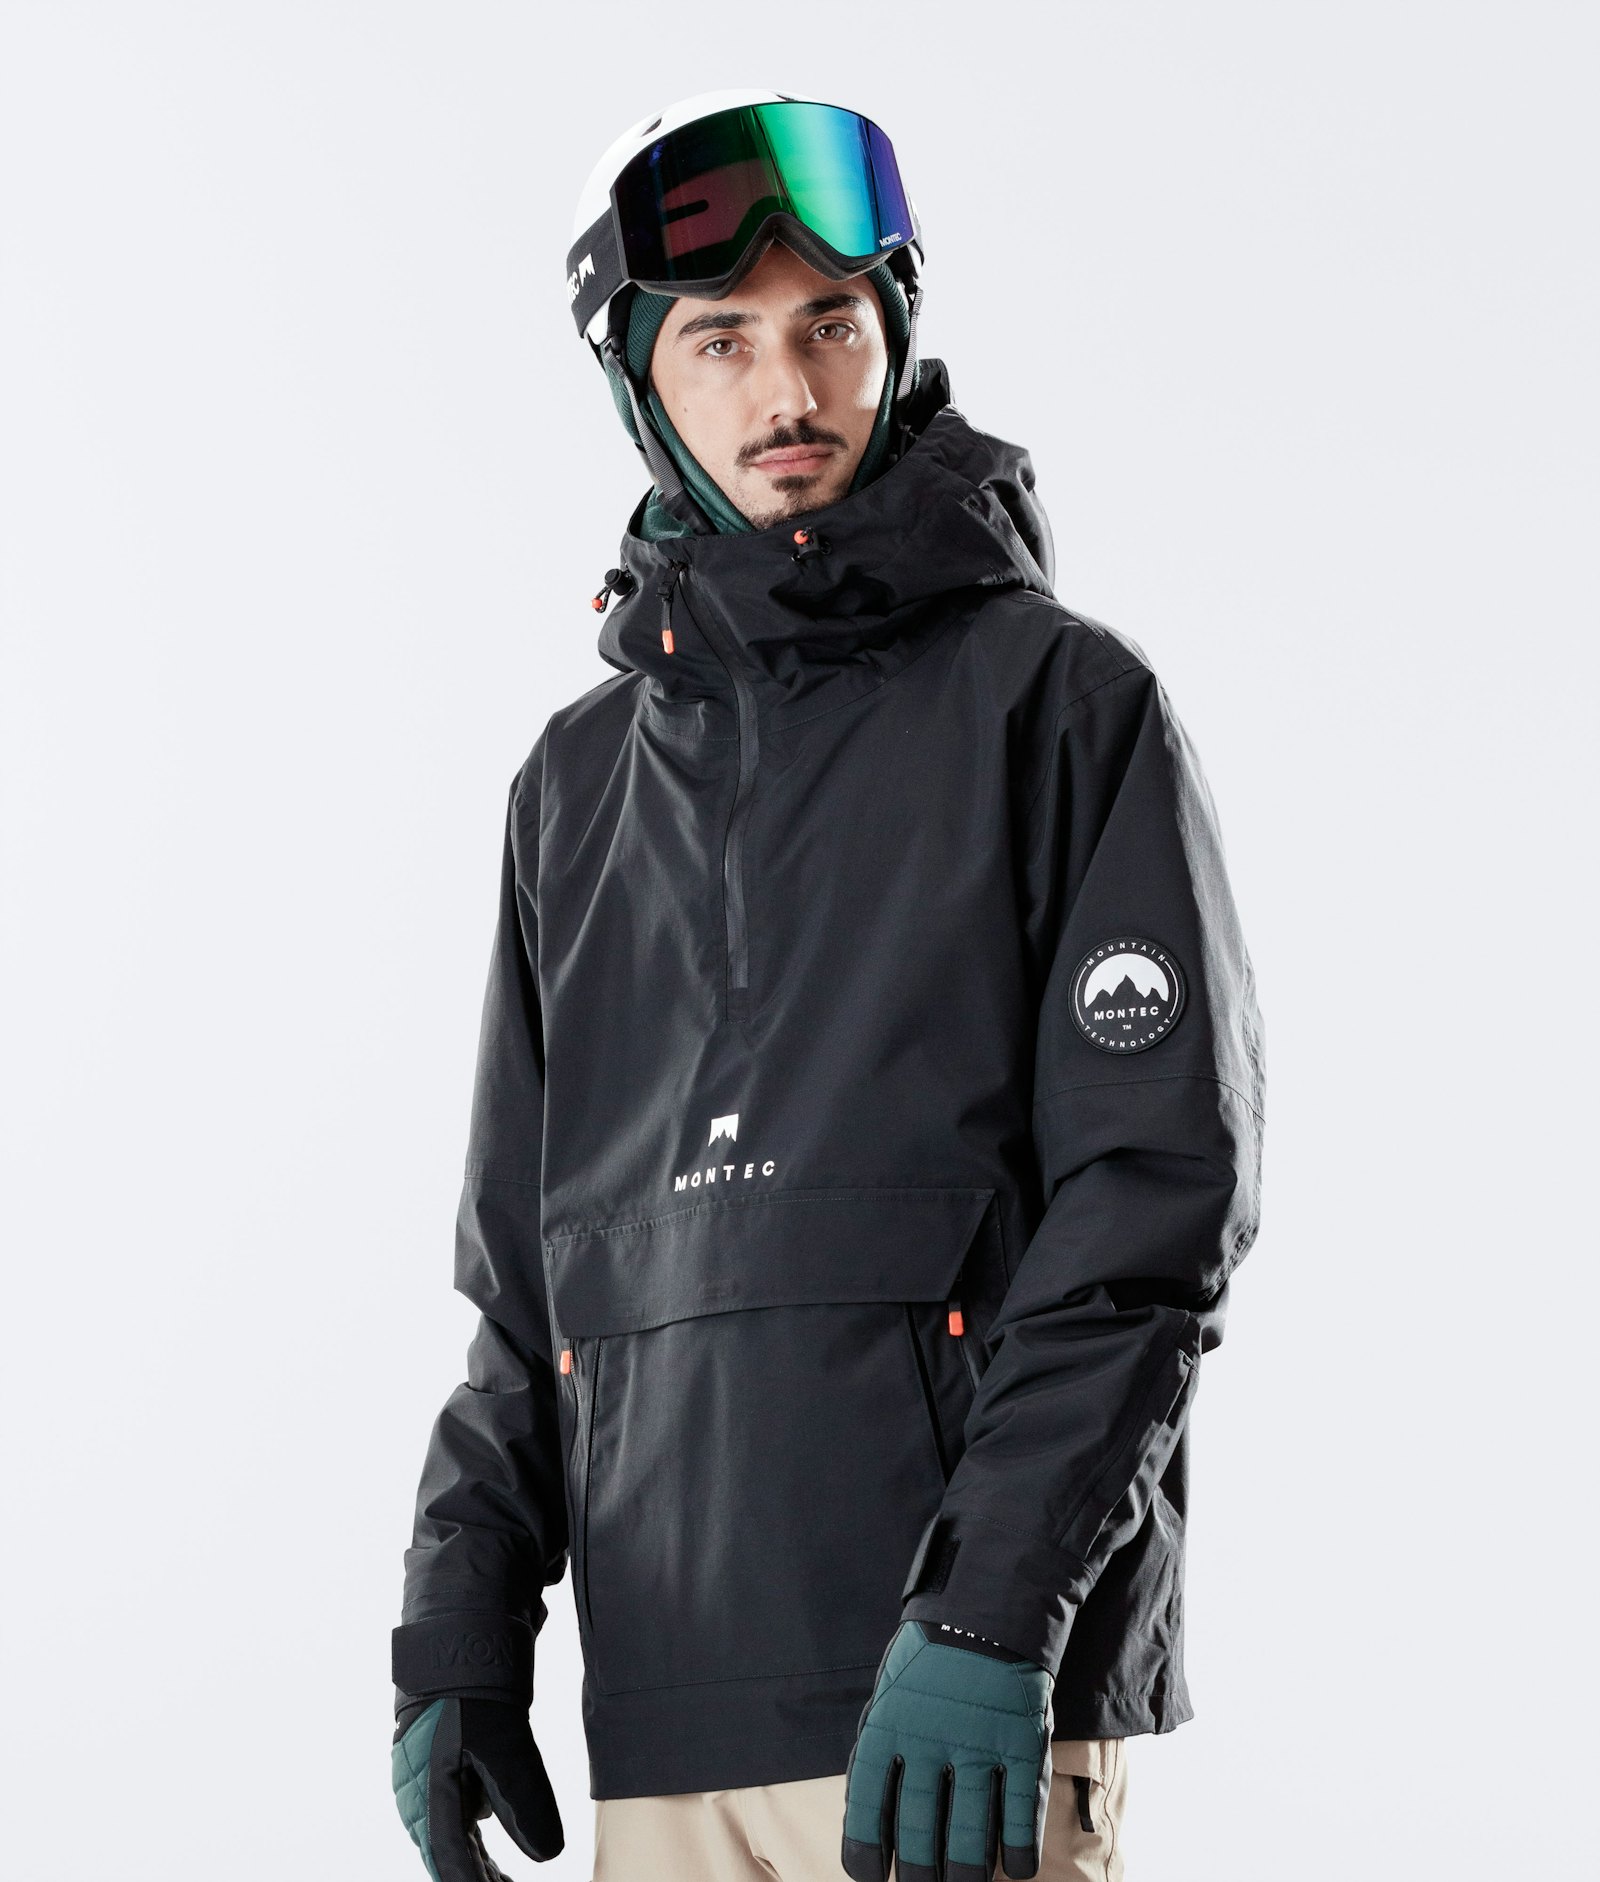 Typhoon 2020 Veste Snowboard Homme Black